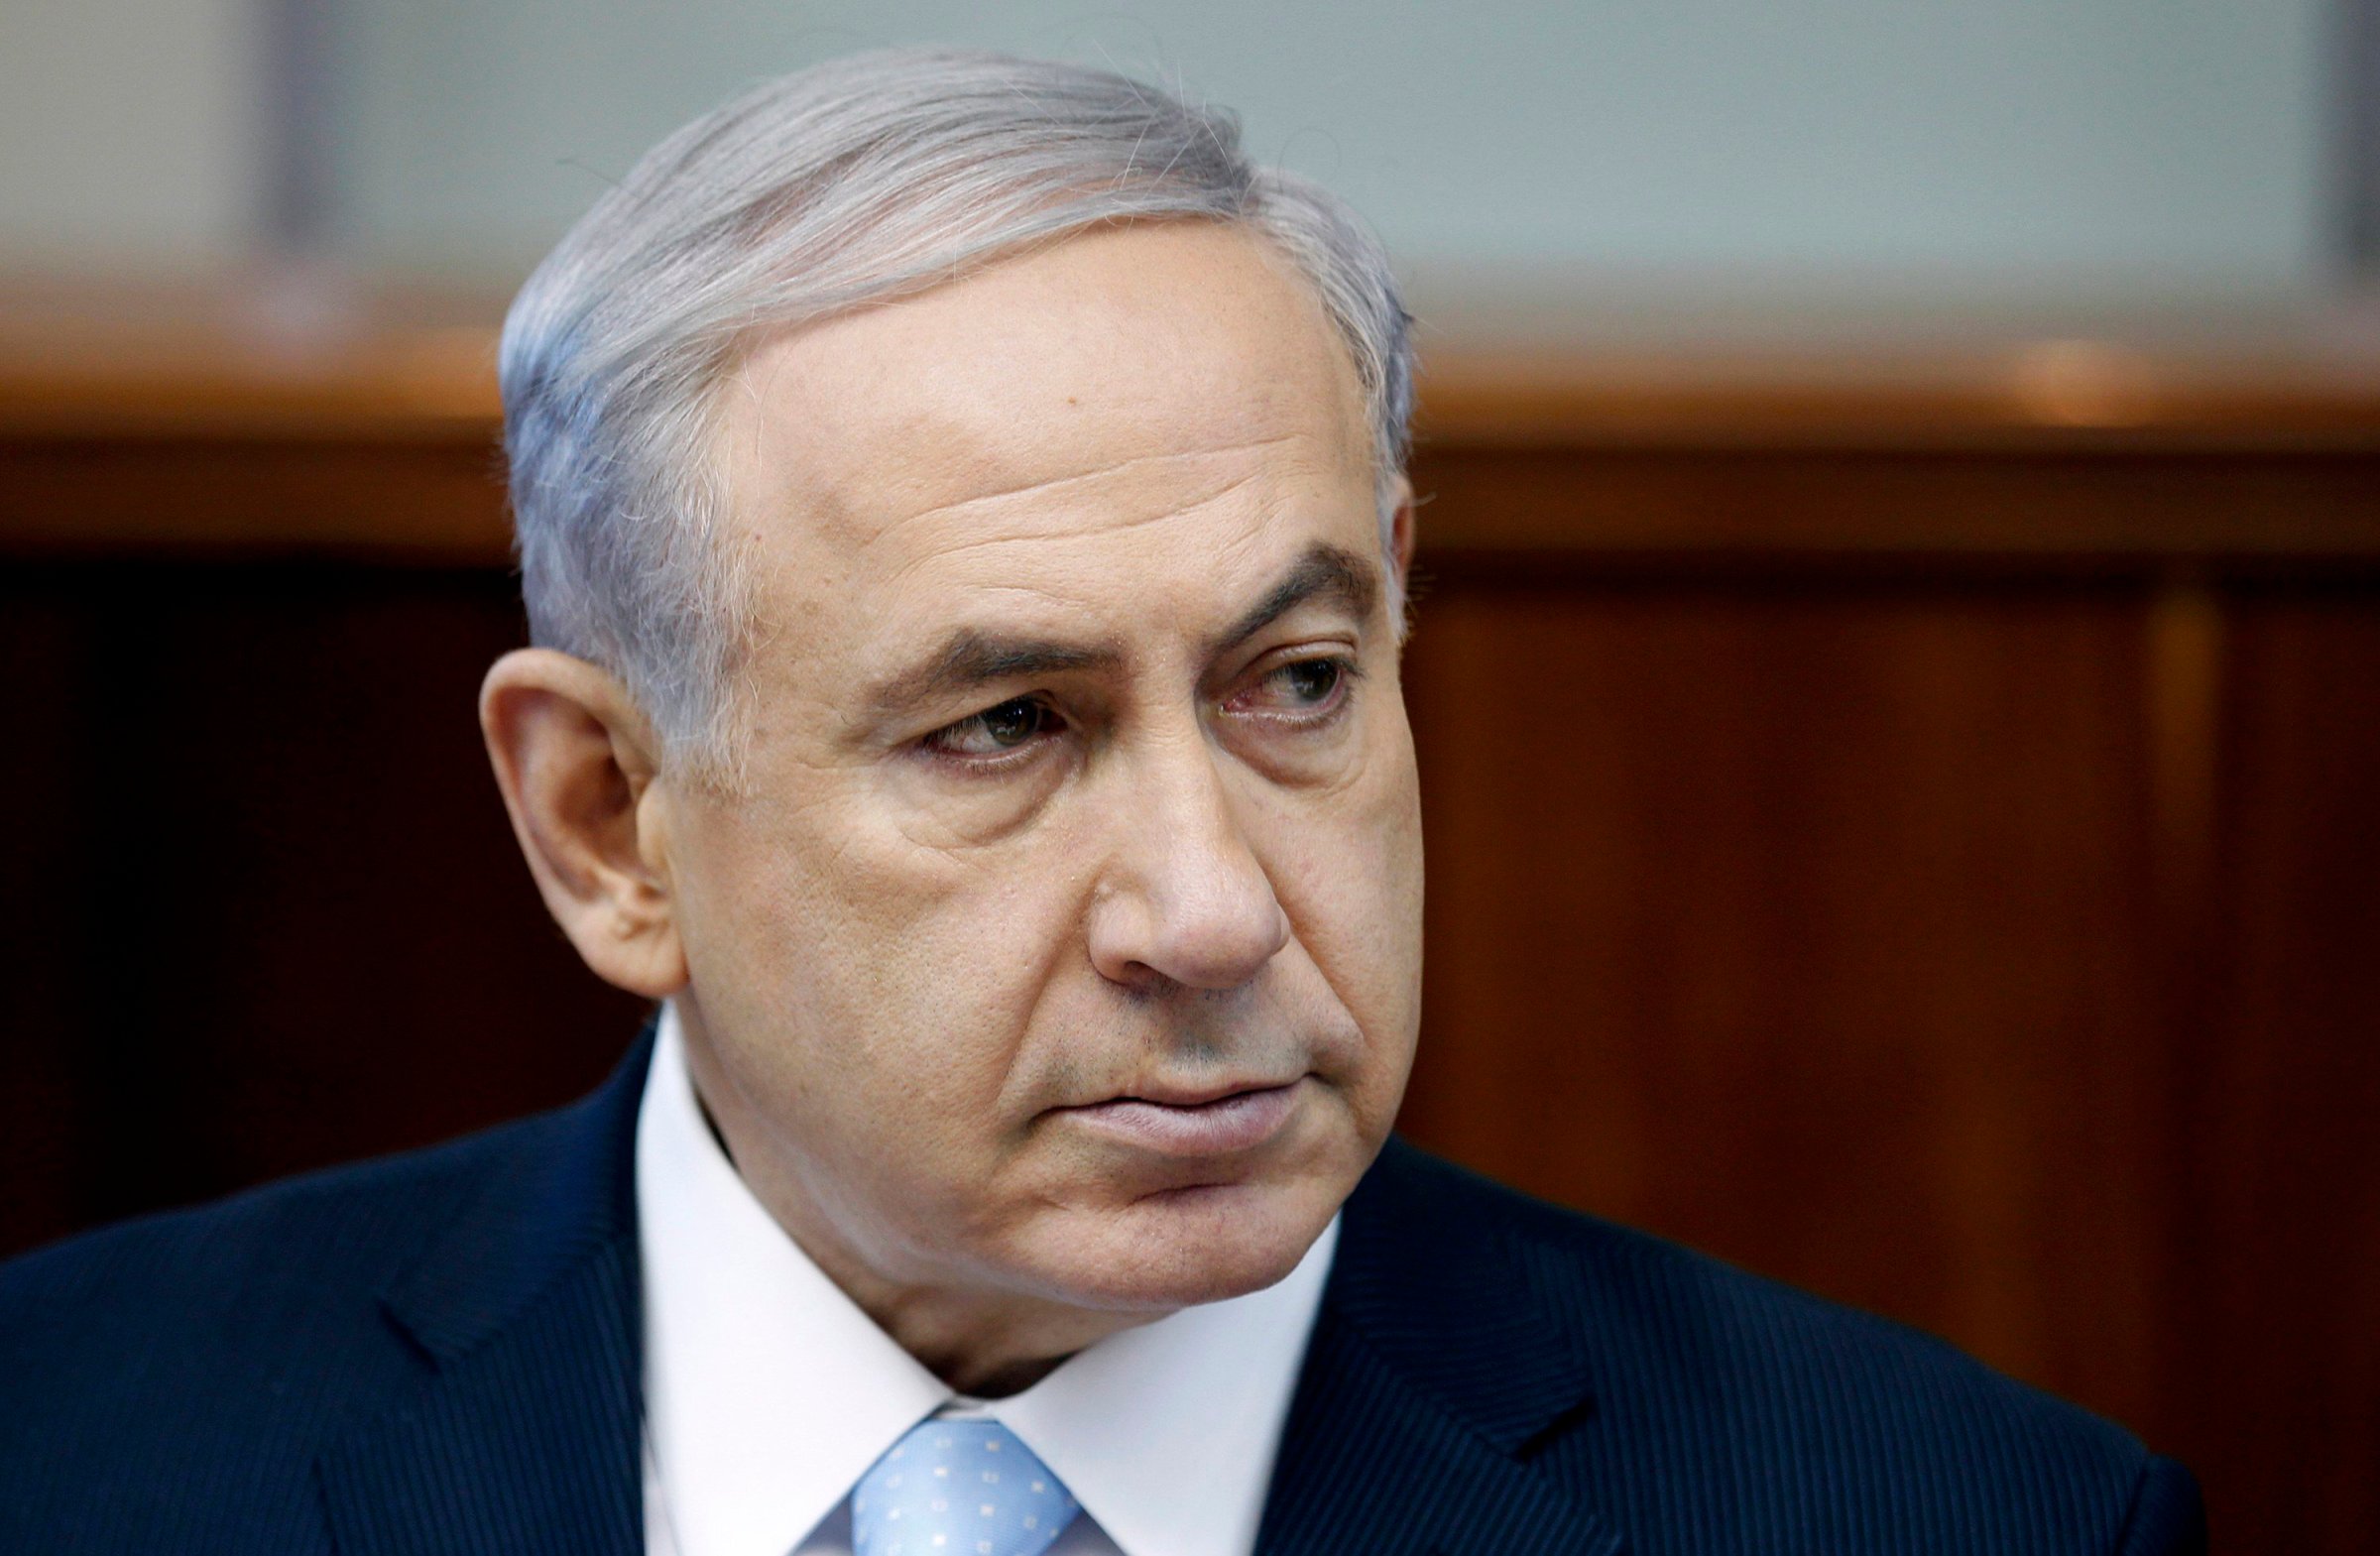 Israel's Prime Minister Netanyahu attends cabinet meeting in Jerusalem